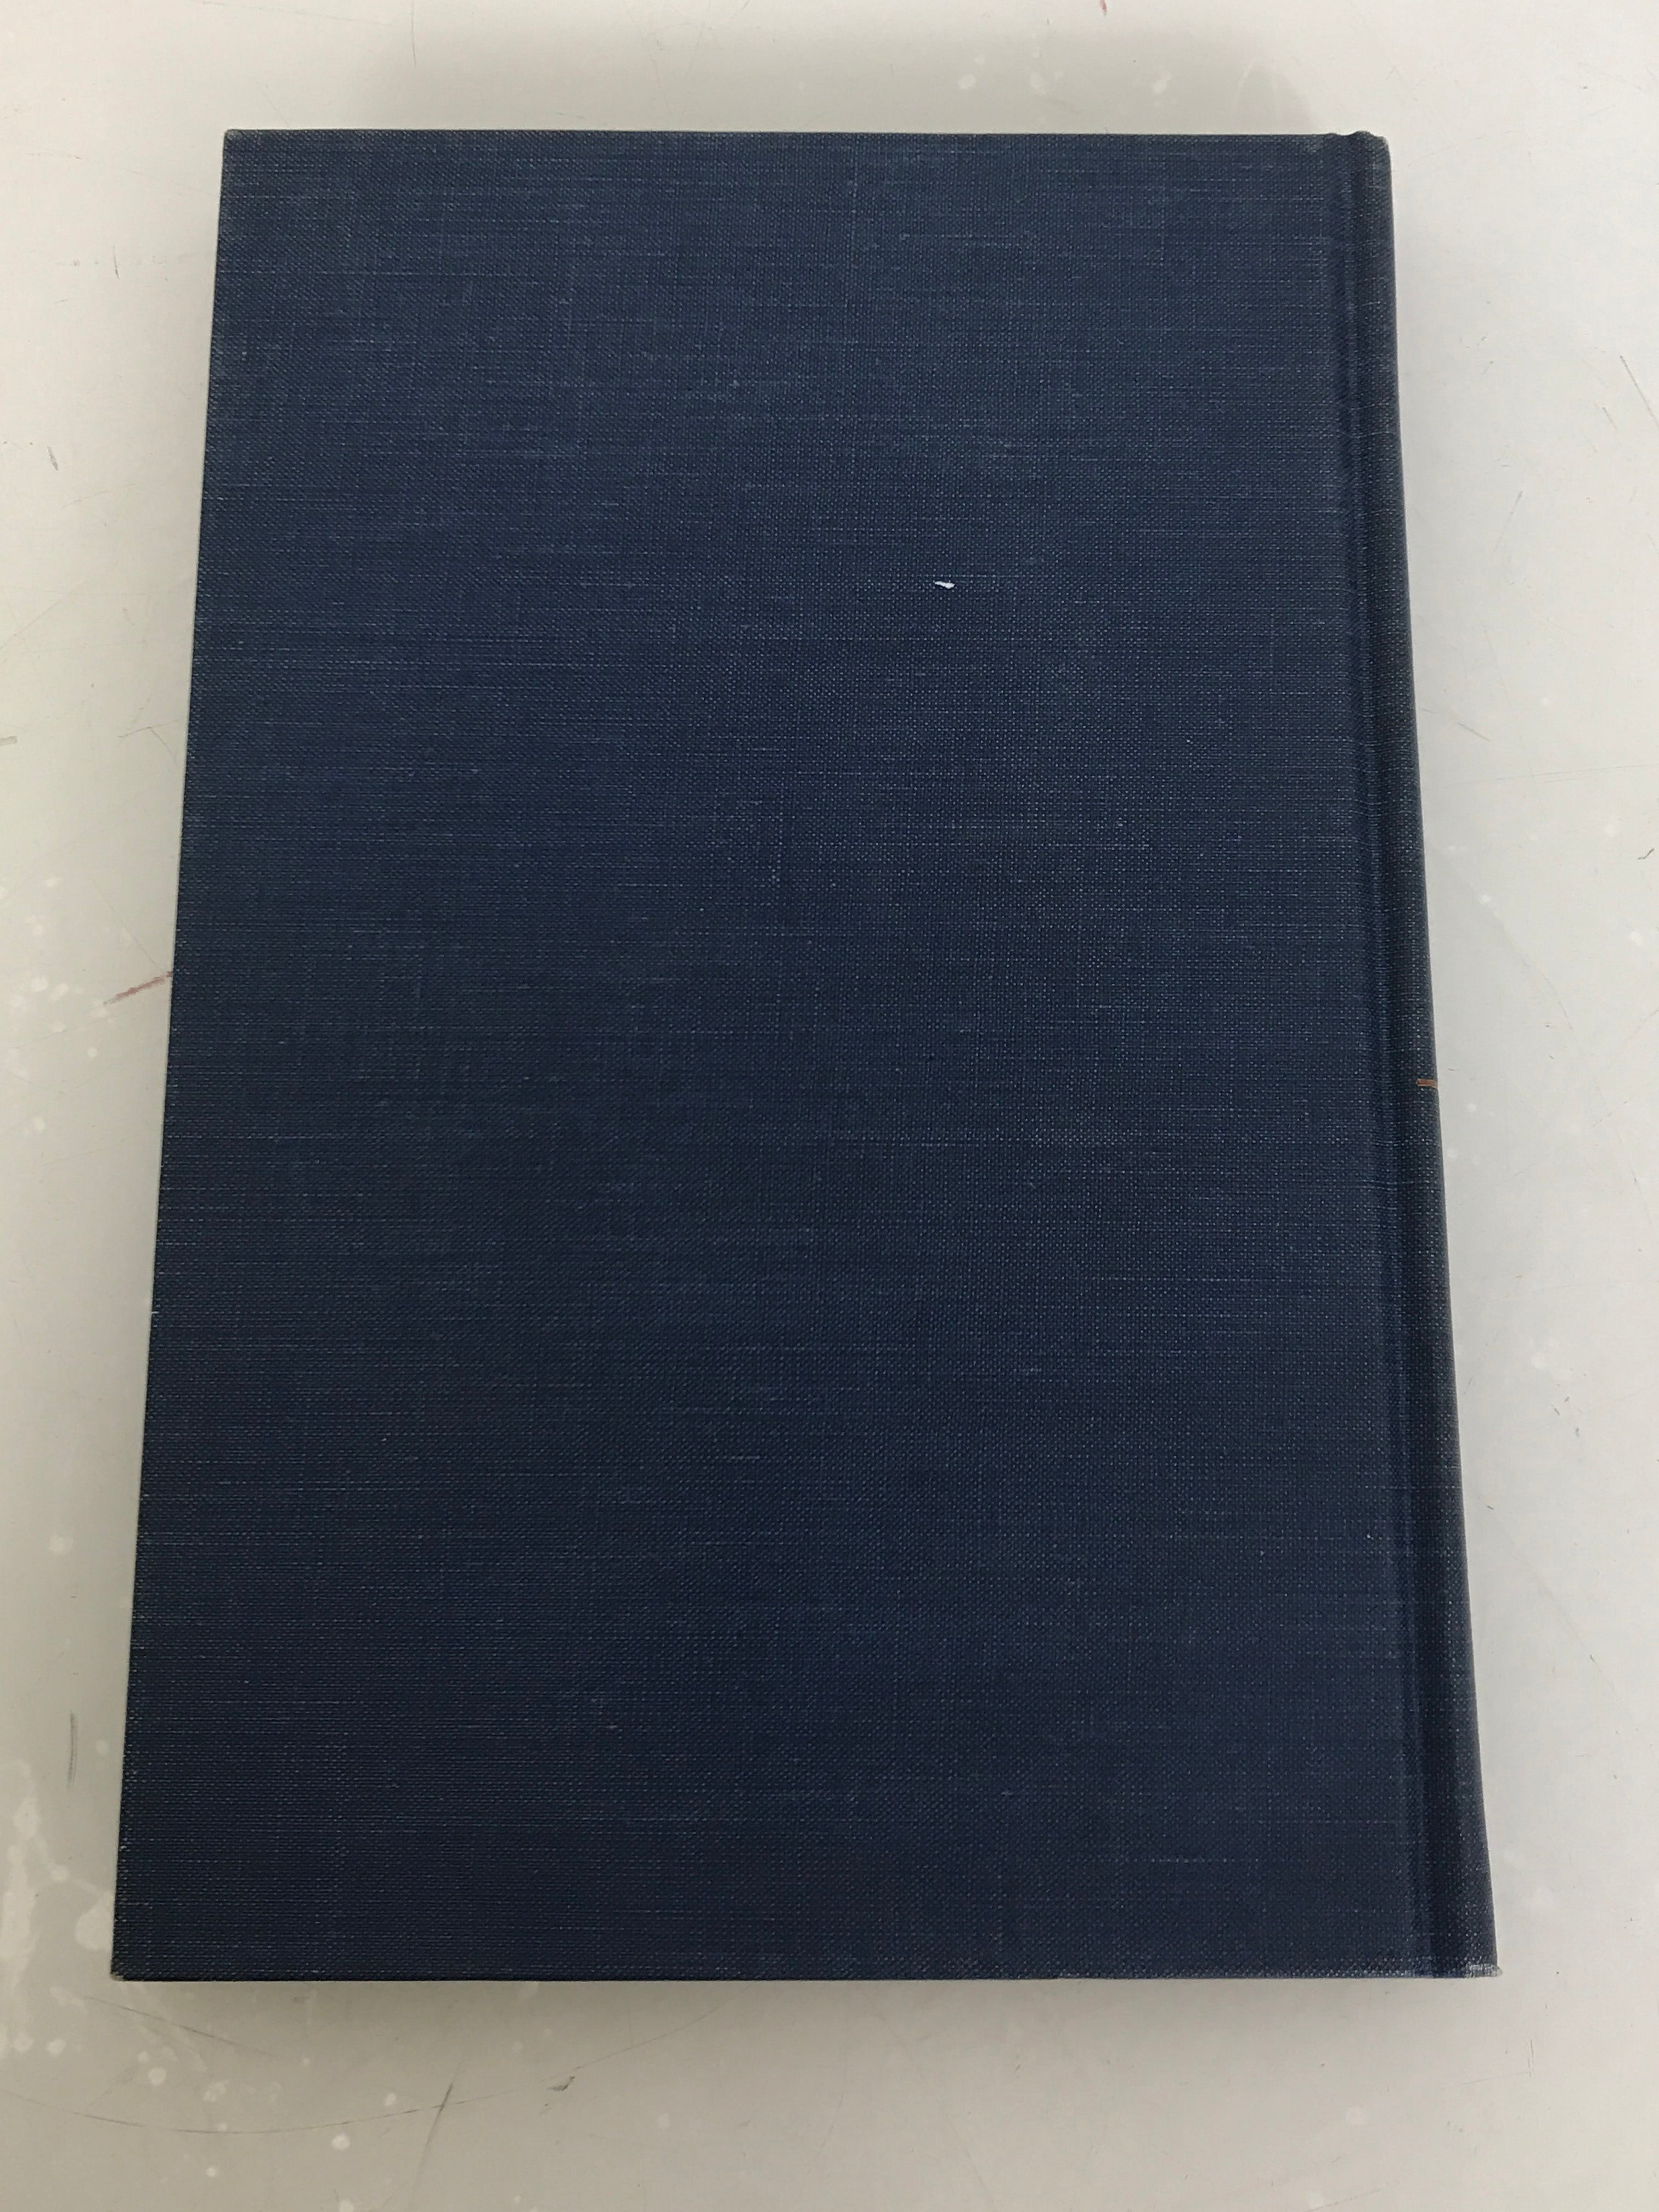 The Casework Relationship by Felix Biestek Loyola University Press 1957 HC